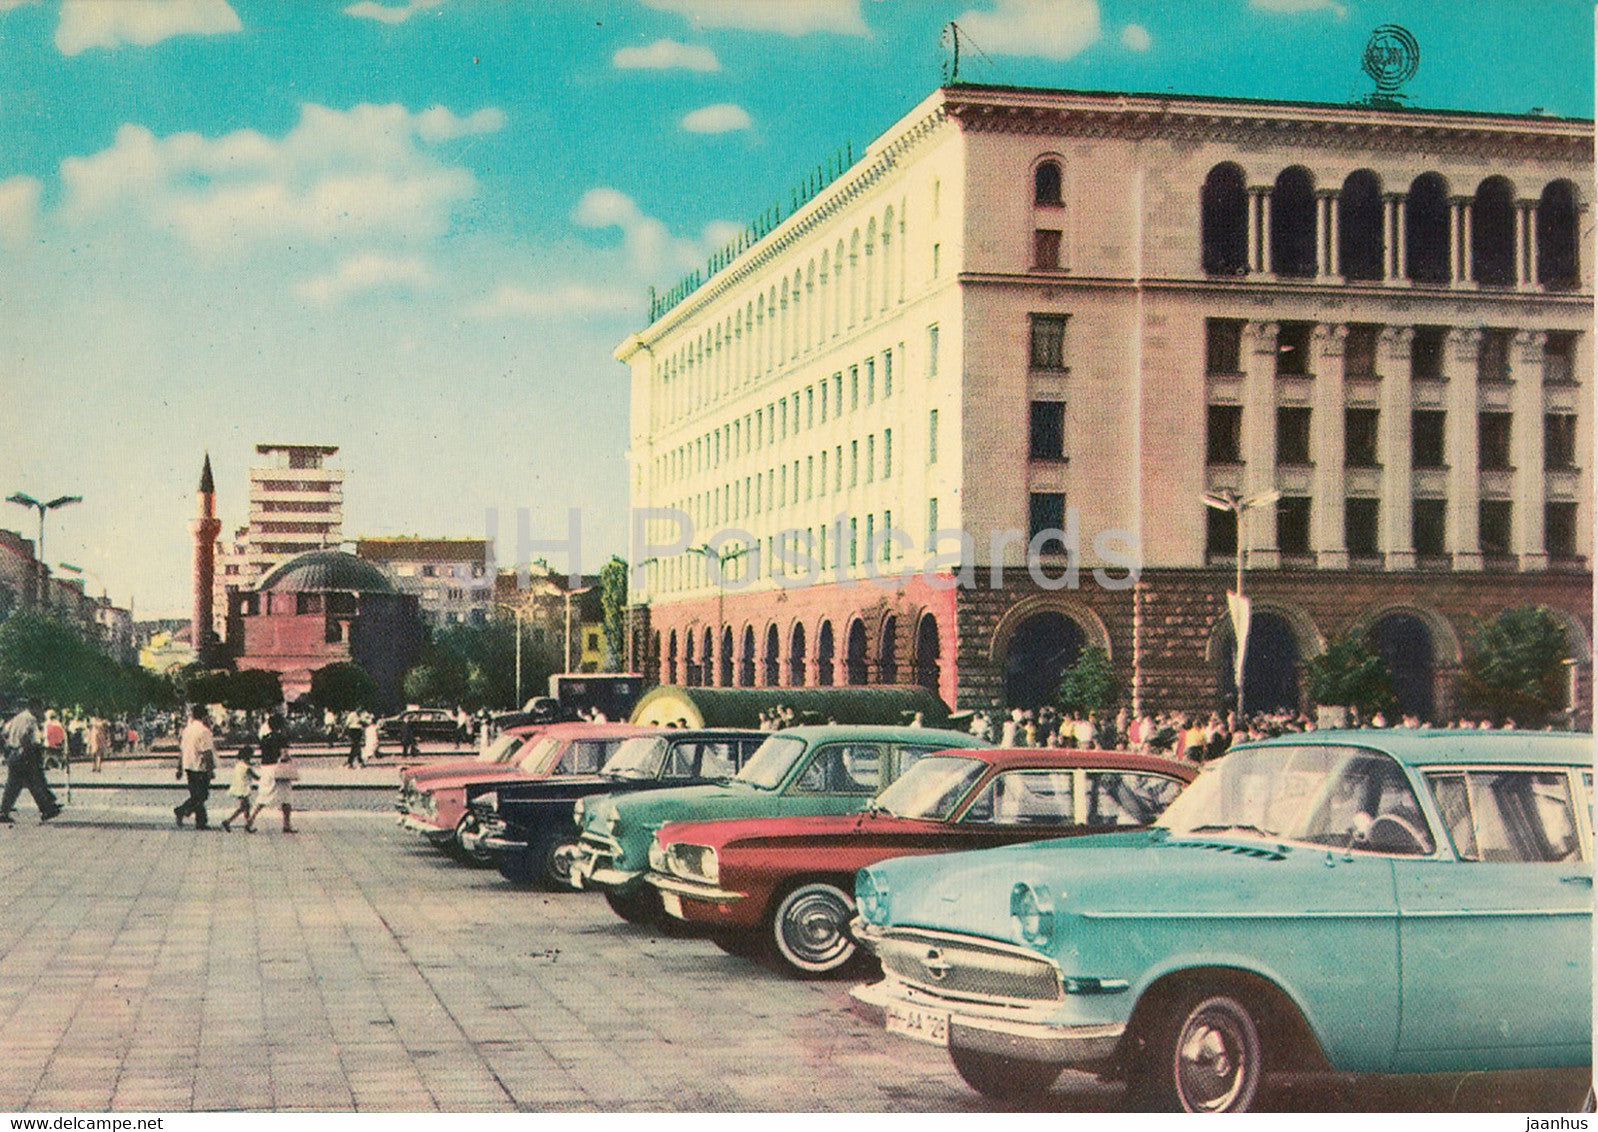 Sofia - City View - car - Bulgaria - unused - JH Postcards